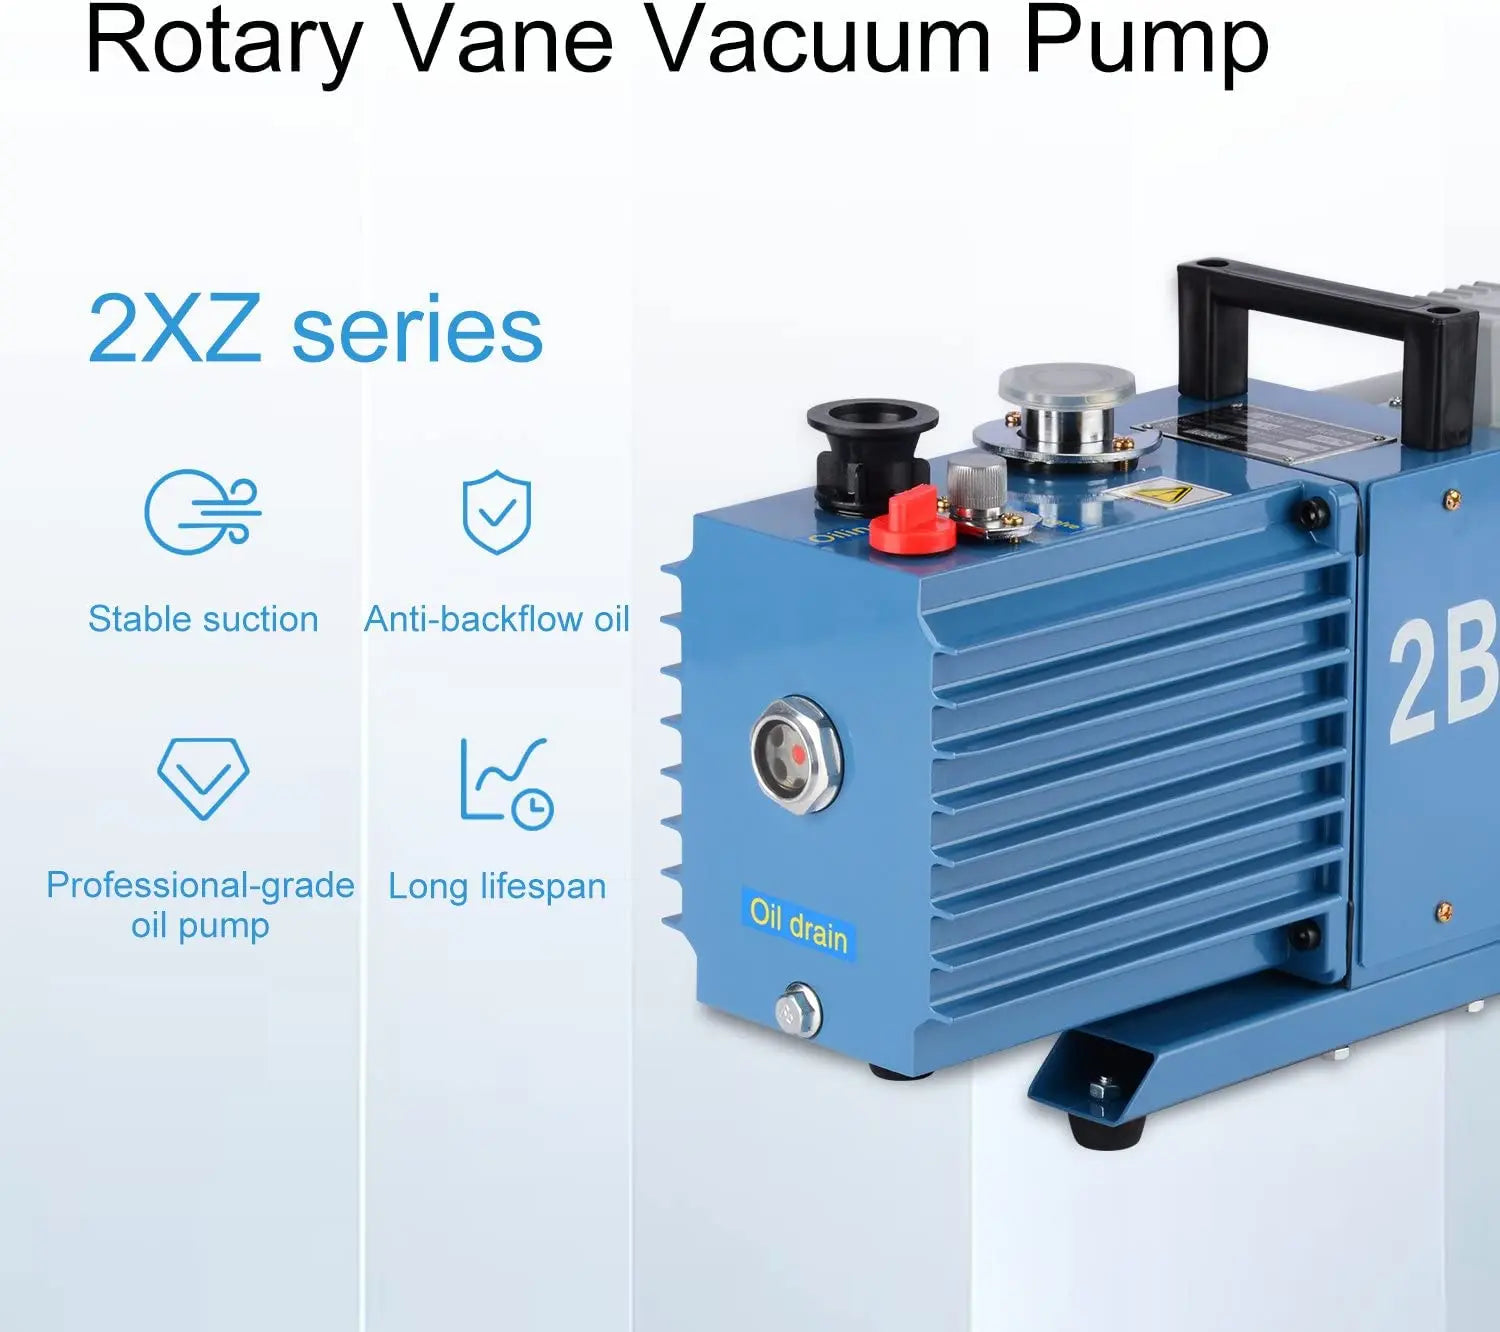 Single Stage Rotary Vane Vacuum Pump, Lab One Stage Vacuum Pump for Laboratory Research - StonyLab Pumps 